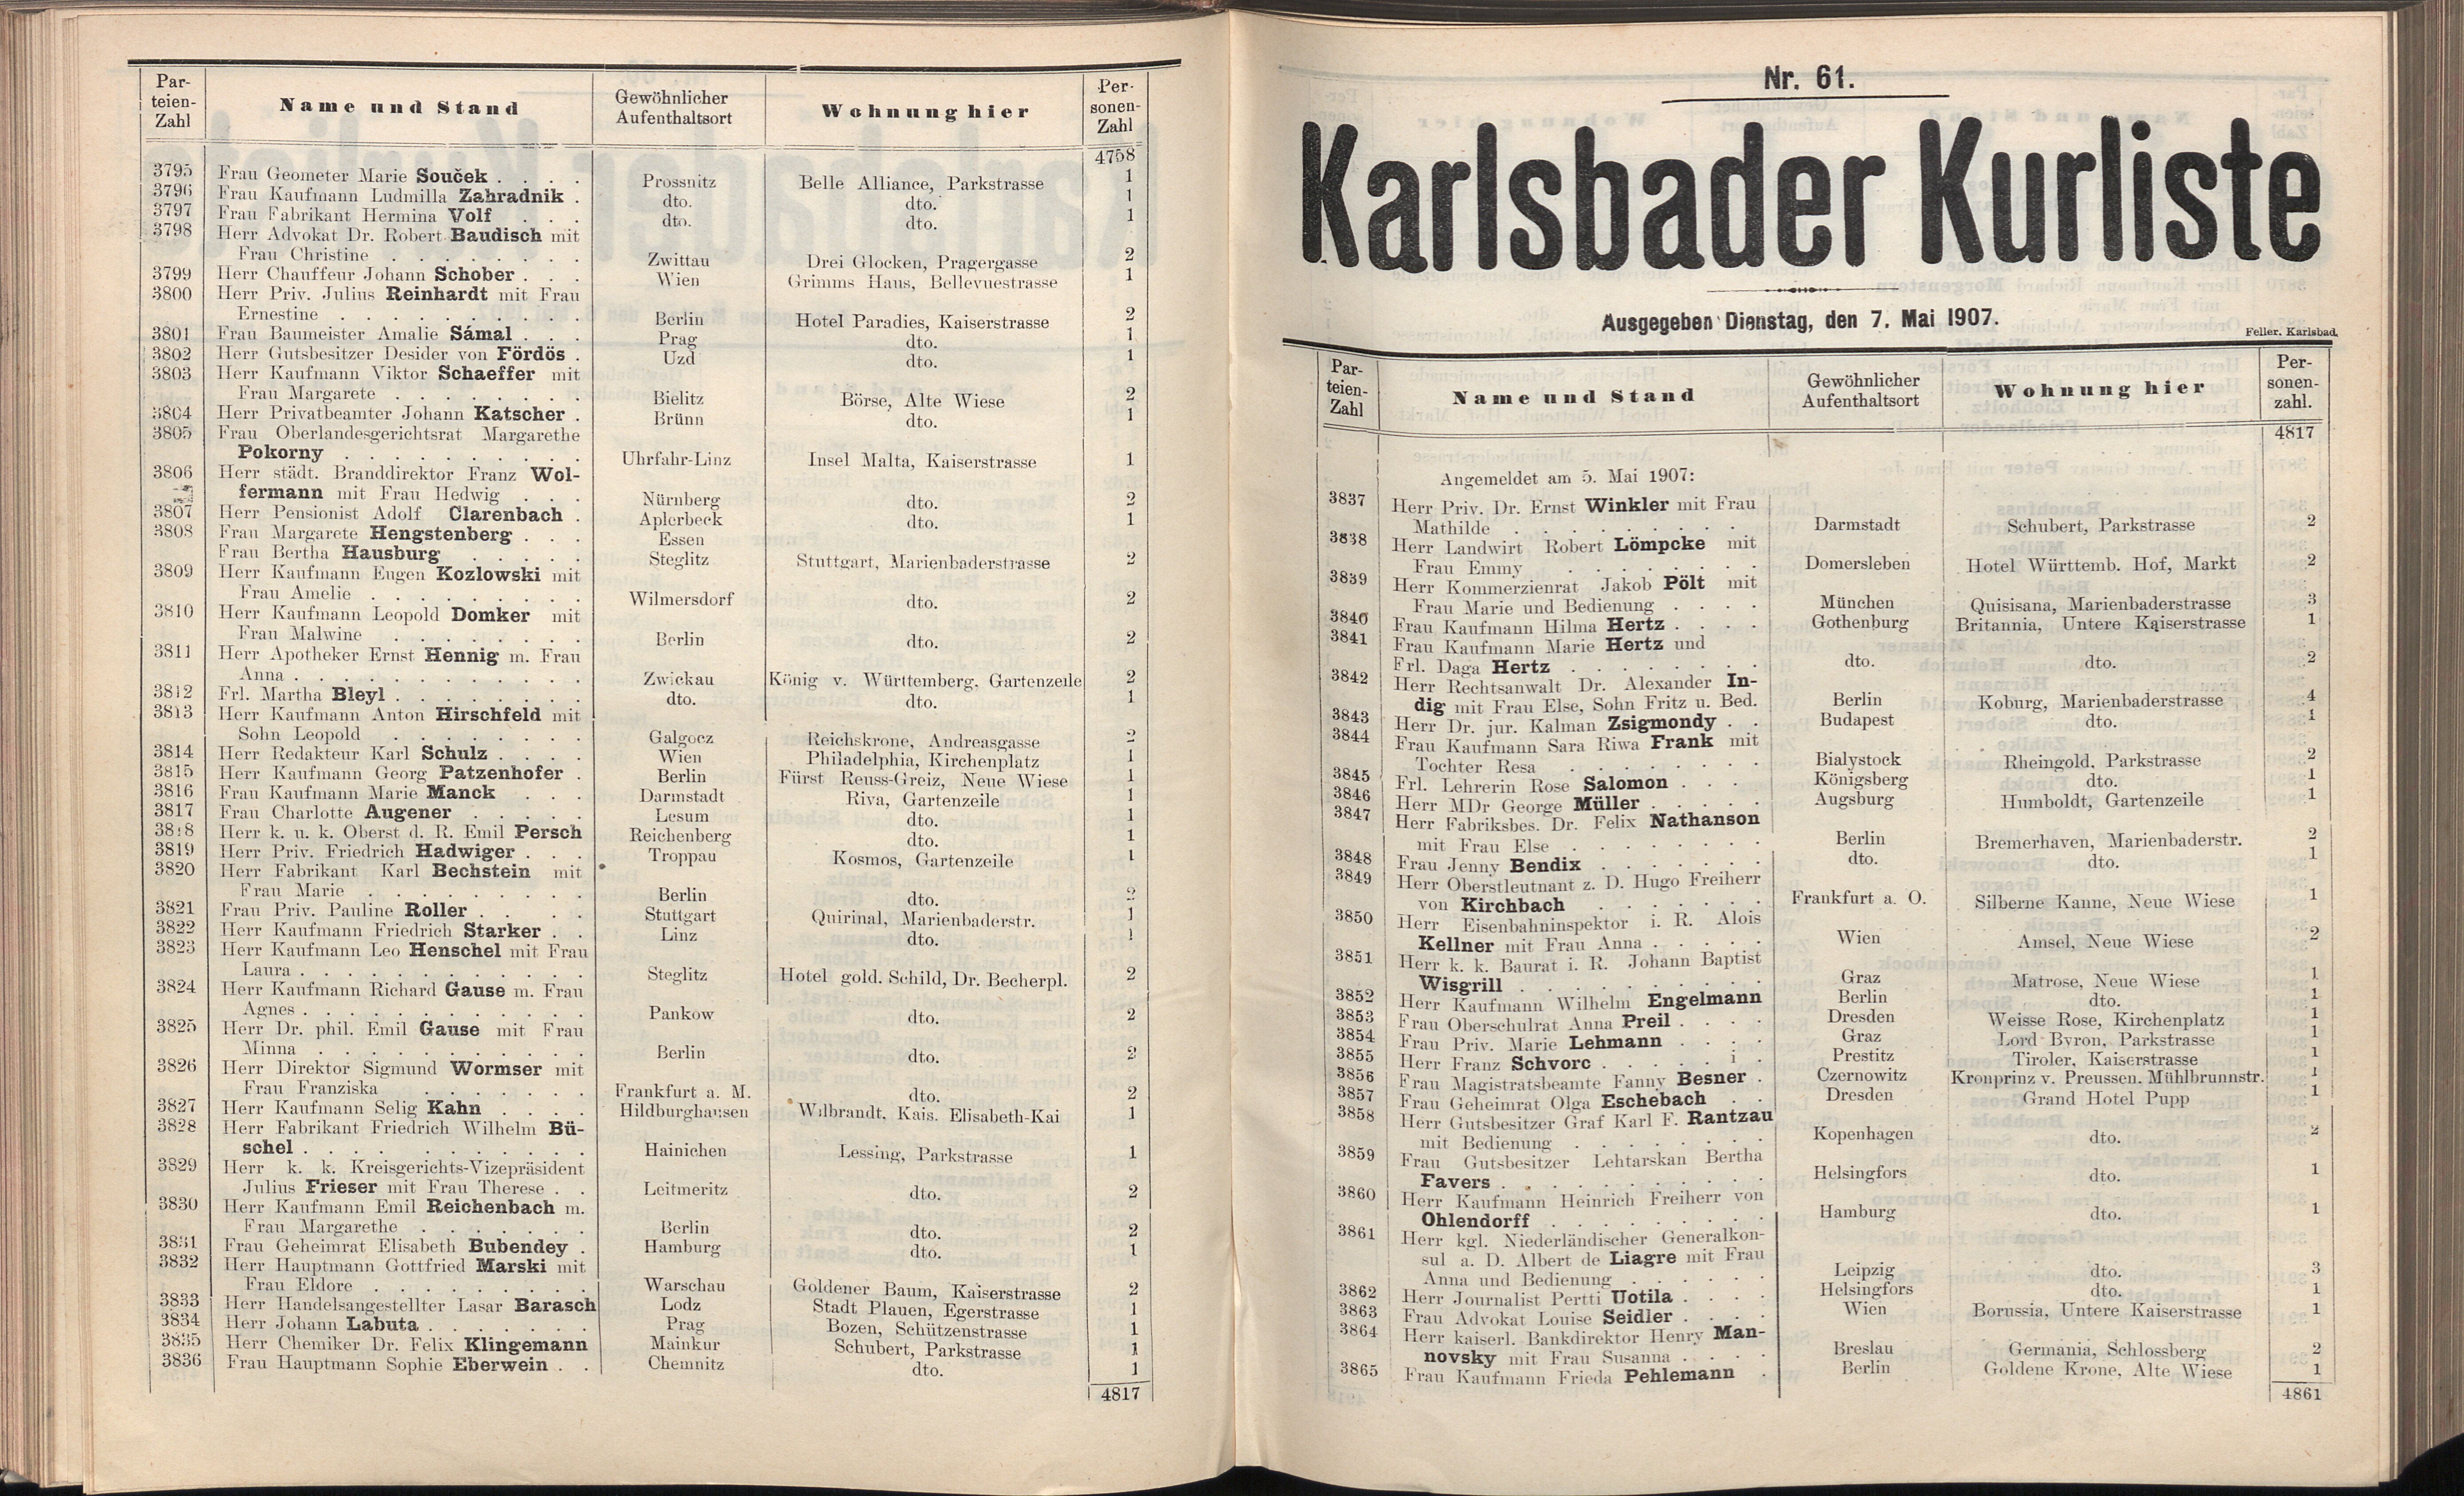 174. soap-kv_knihovna_karlsbader-kurliste-1907_1750